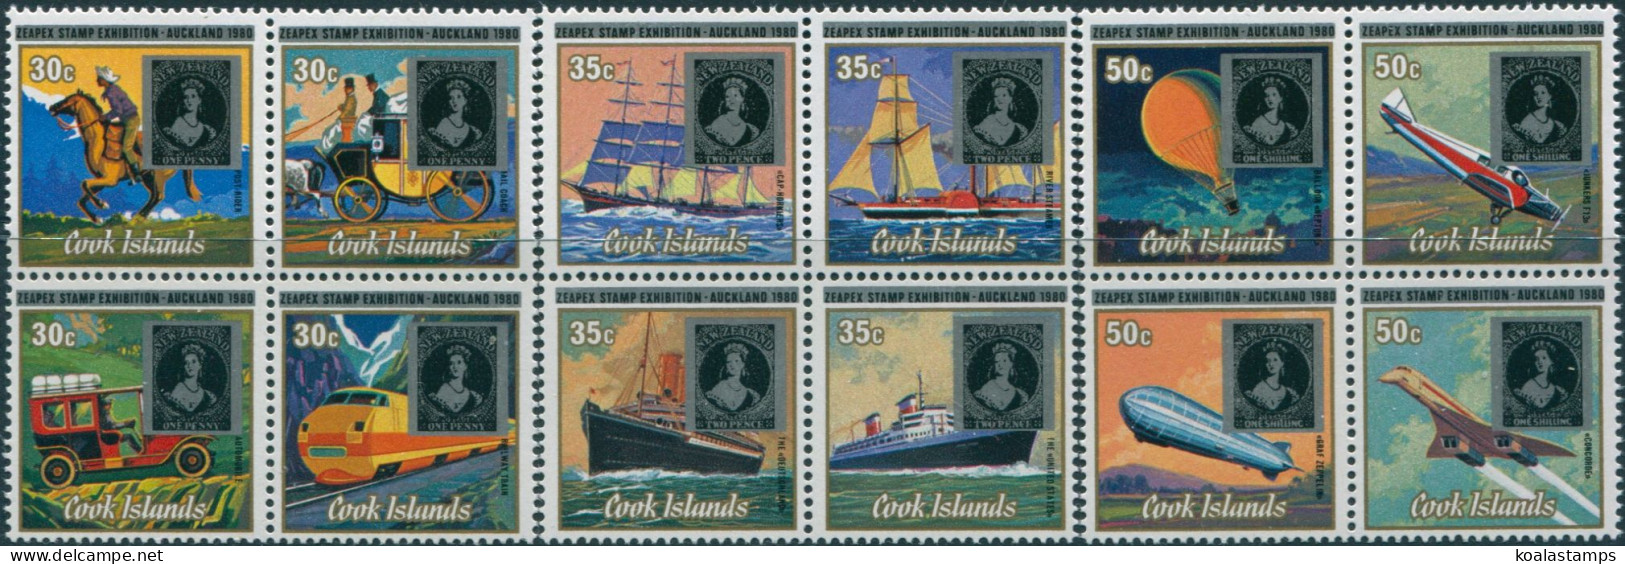 Cook Islands 1980 SG687-698 Zeapex Stamp Exhibition Set MNH - Cook